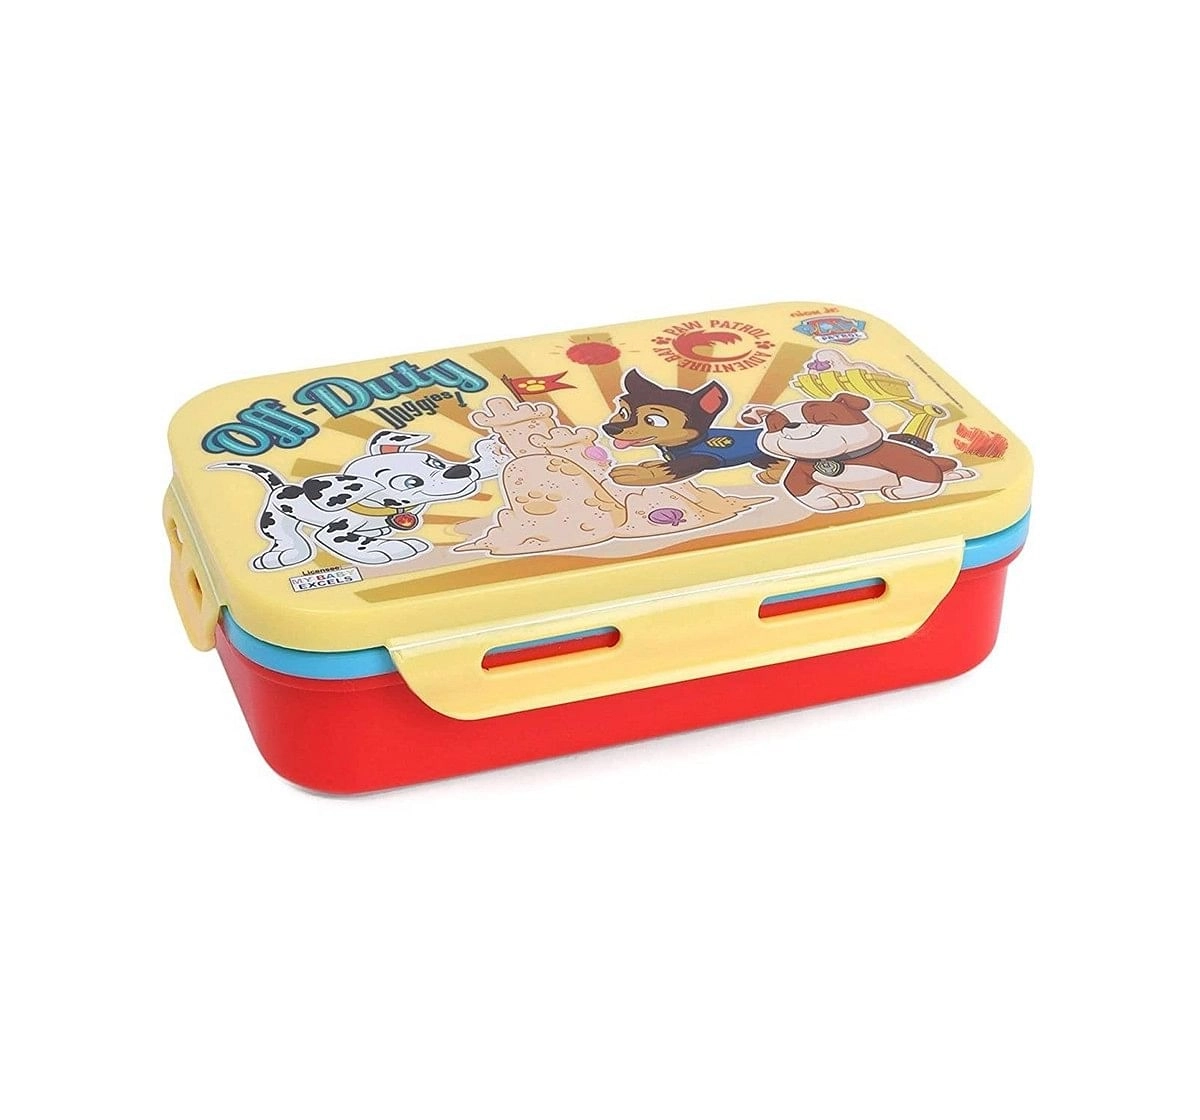 Paw Patrol Lunch Box for Kids age 3Y+ 